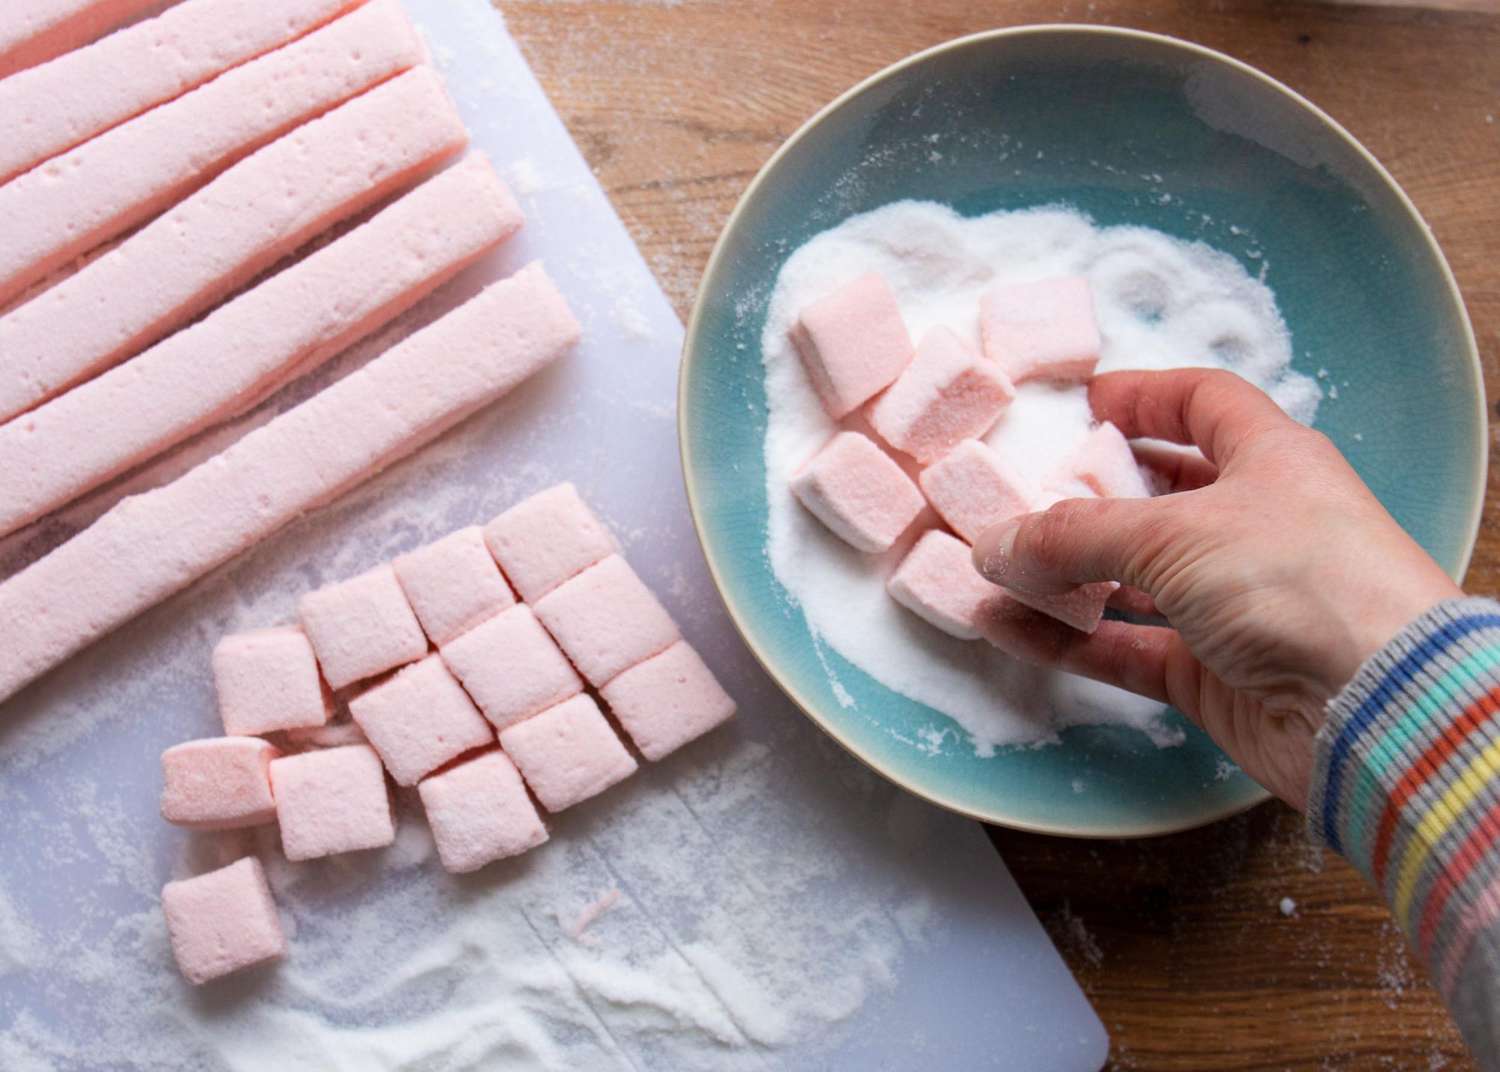 tossing marshmallows in sugar